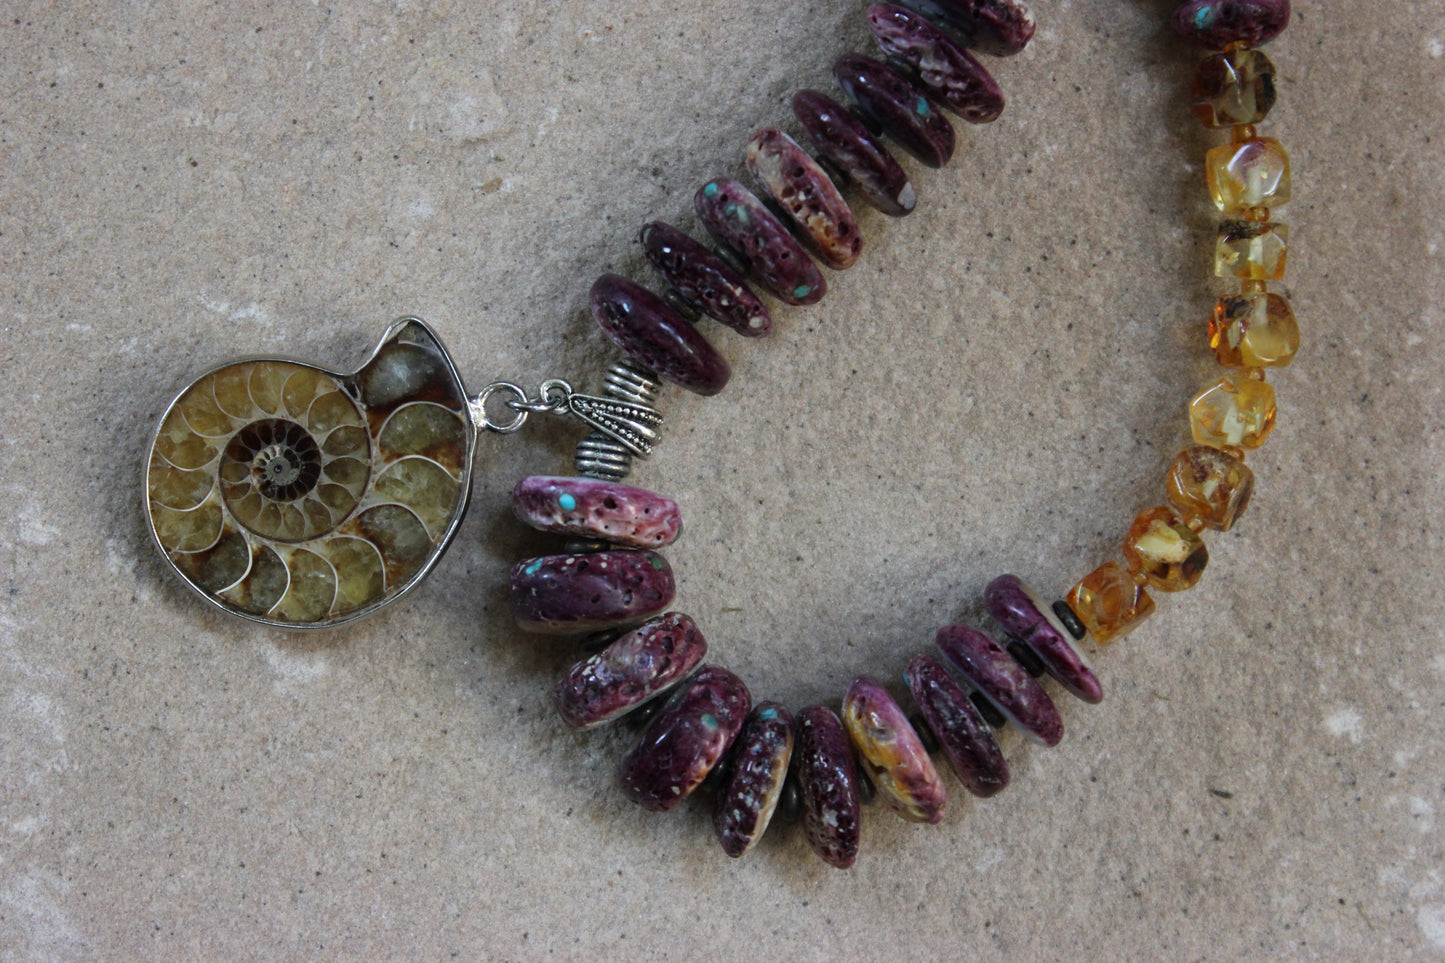 Amber, Ammonite, Spondylus Beaded Necklace